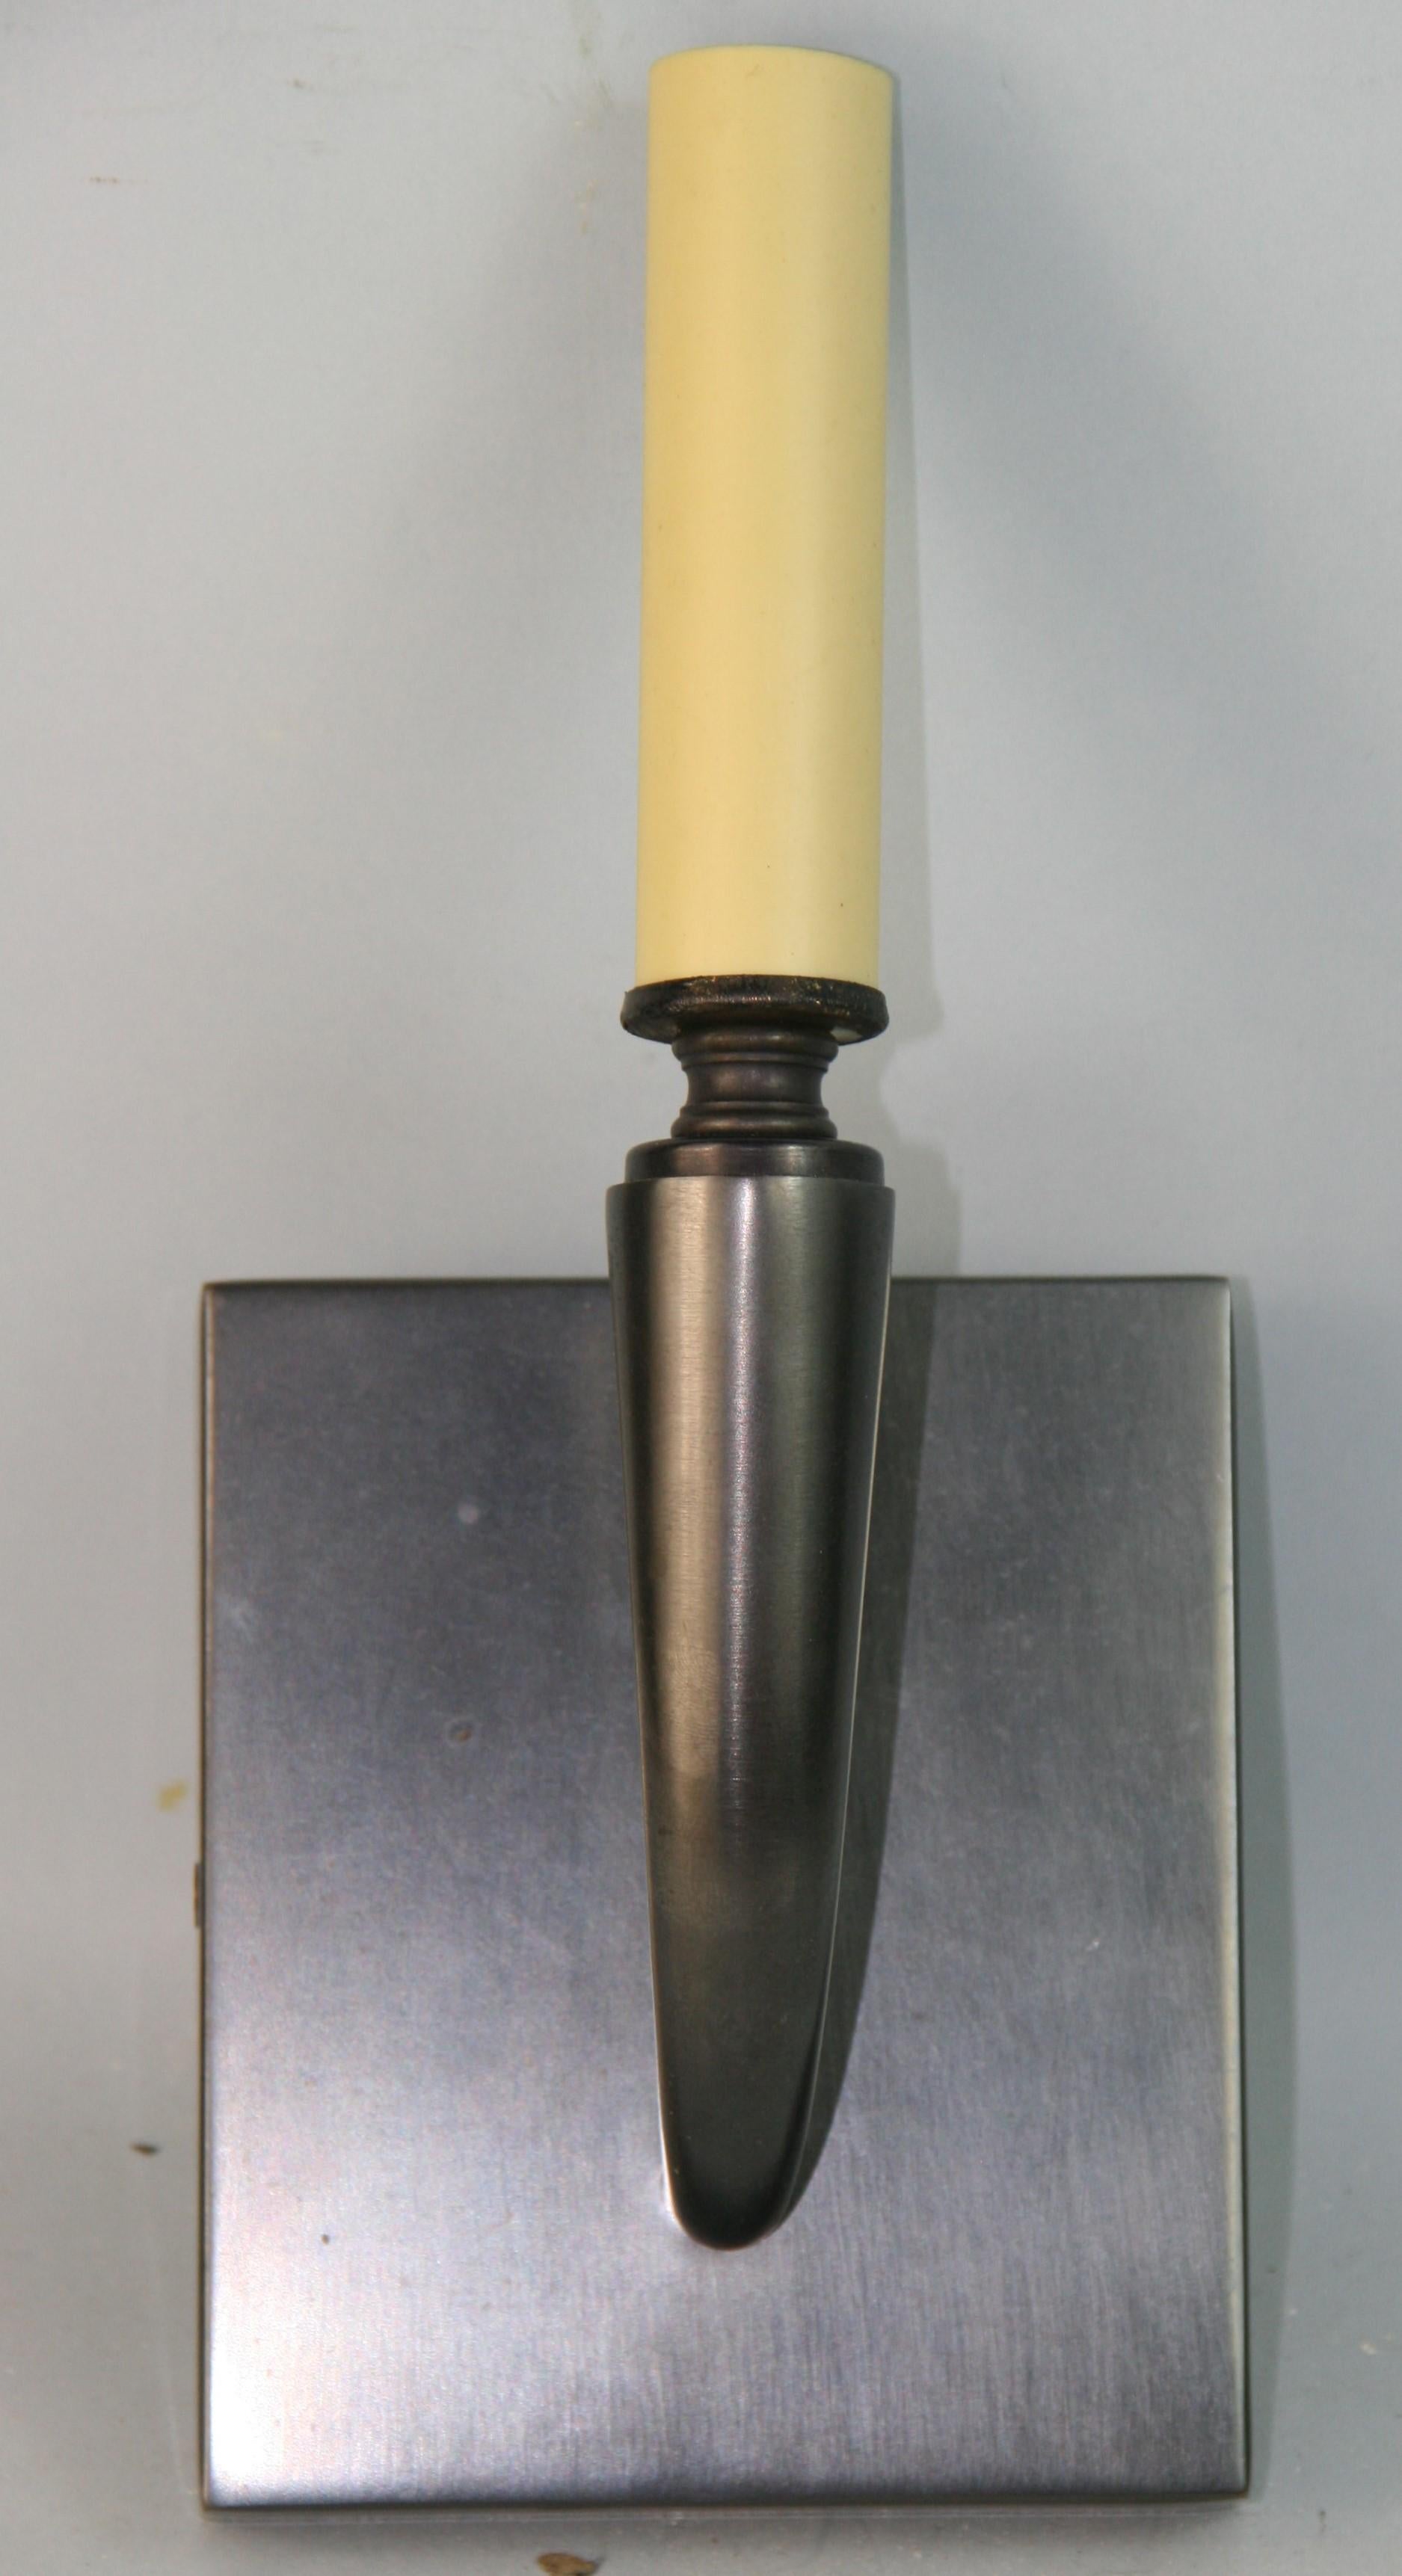 1526 Pair Deco style bronze single light sconces
Wired takes open 60 watt candelabra based bulb